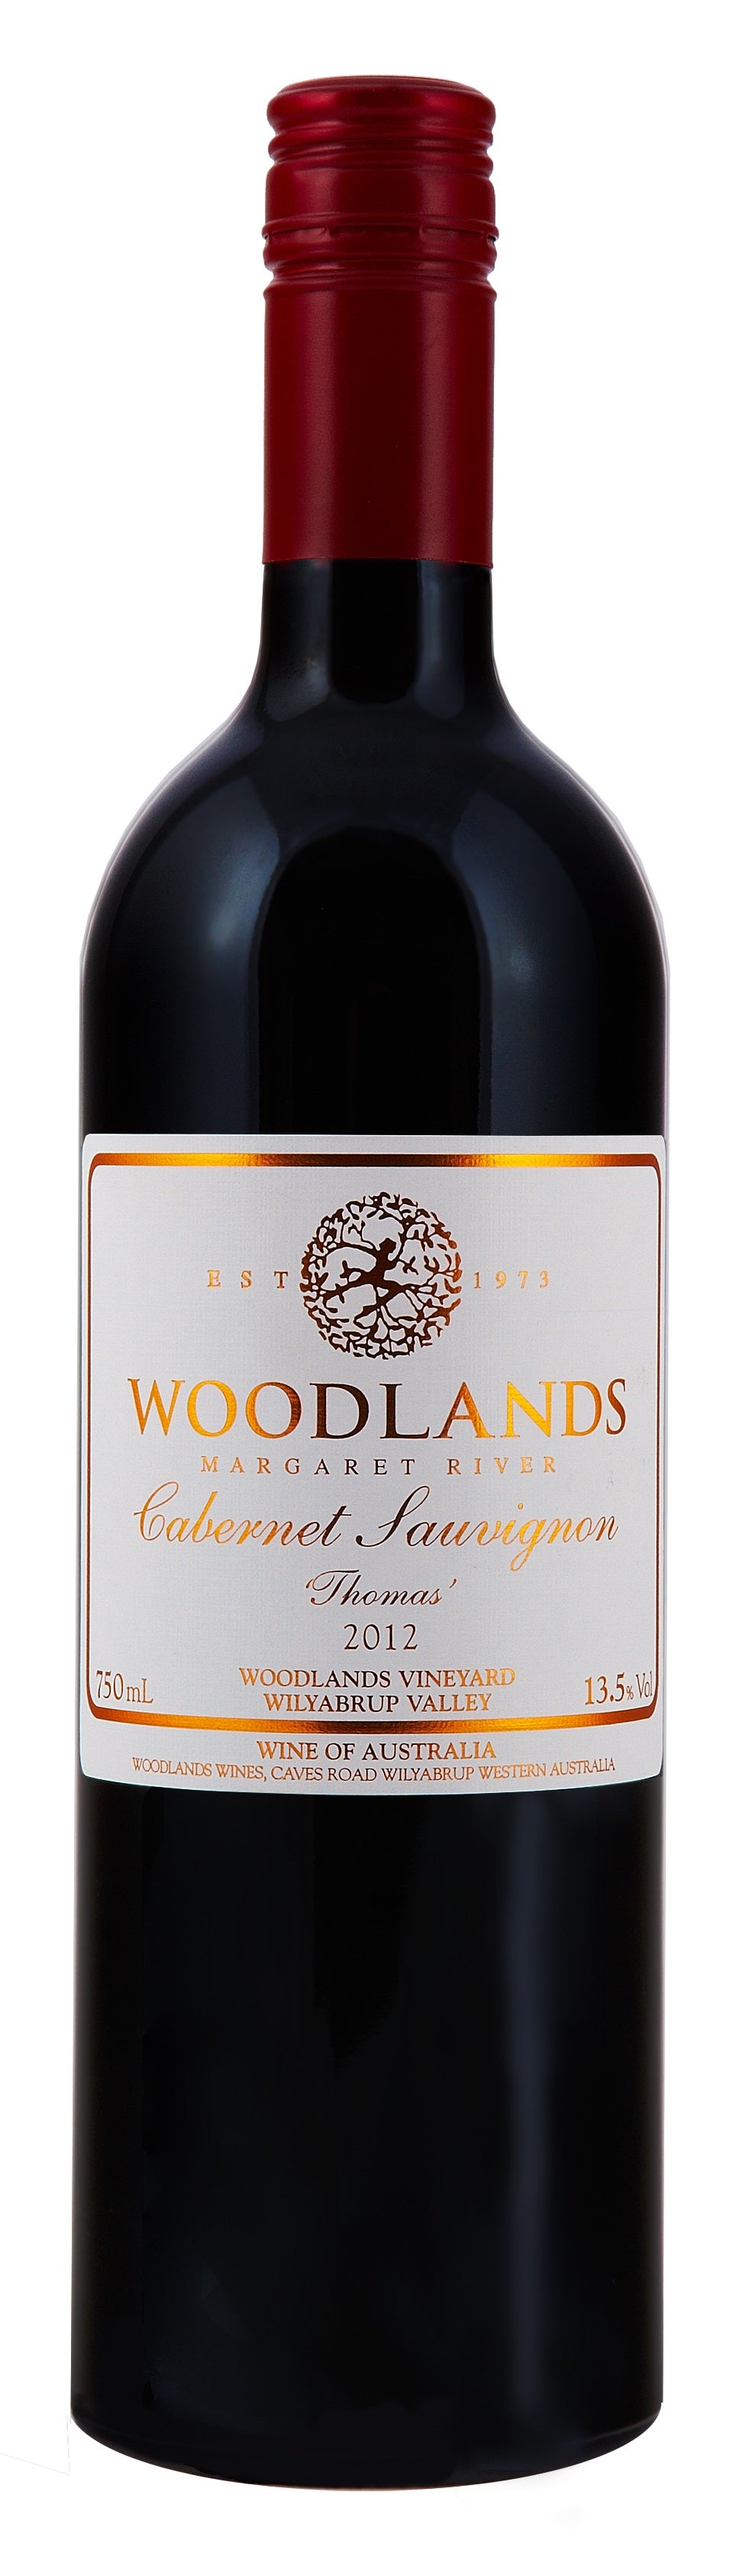 2012 Woodlands Vineyard Thomas